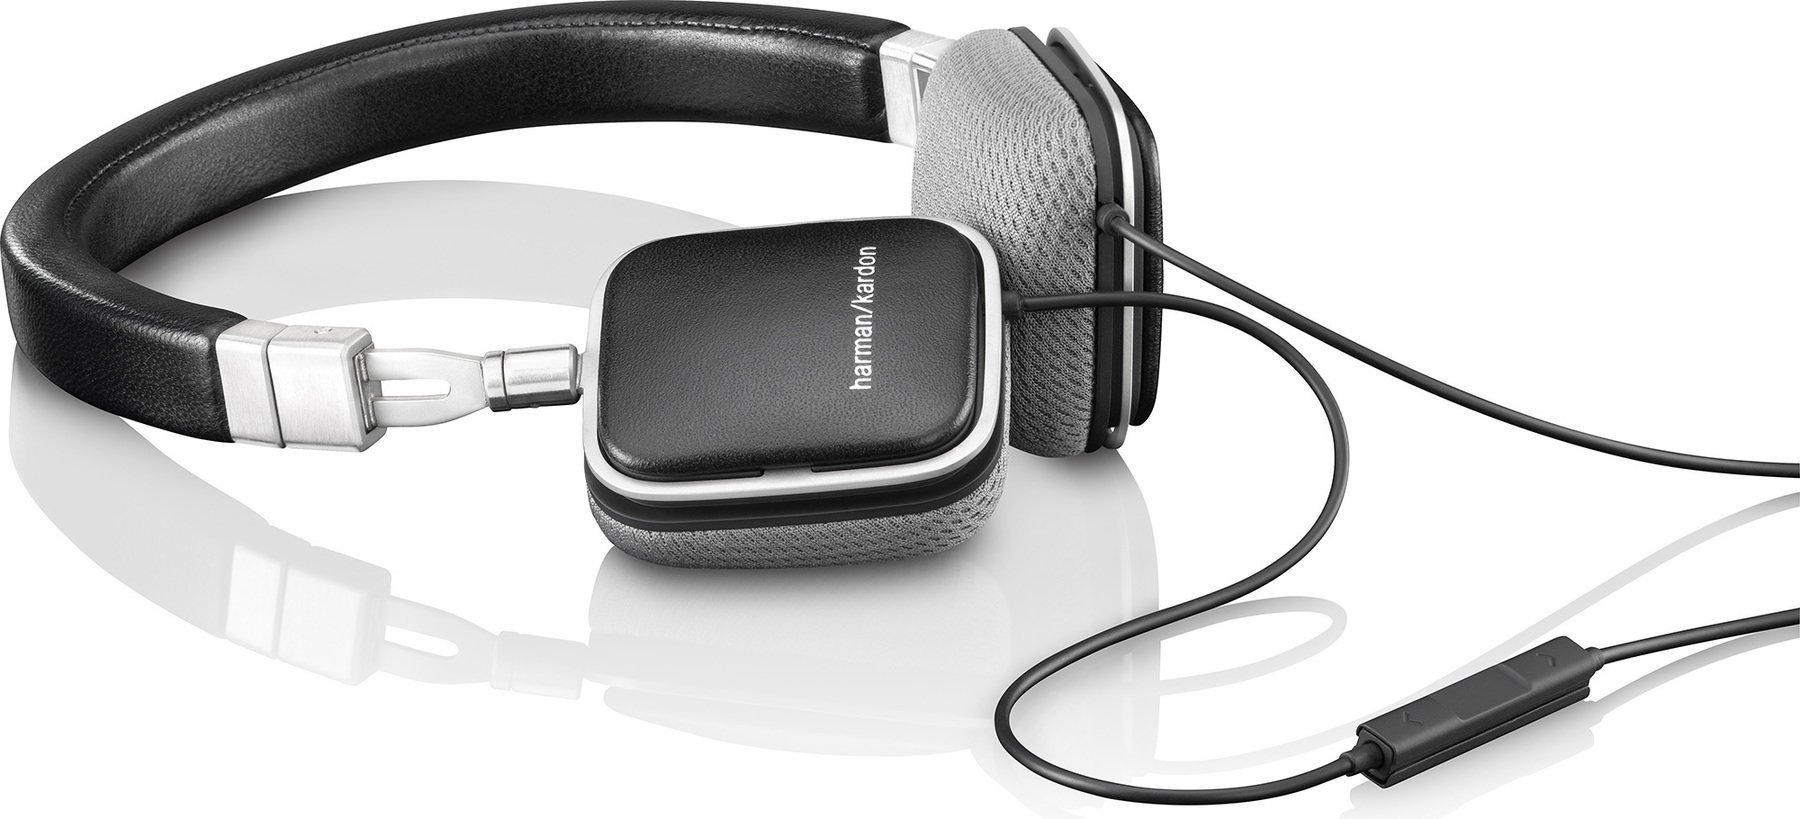 On-ear Headphones Harman Kardon Soho iOS Black